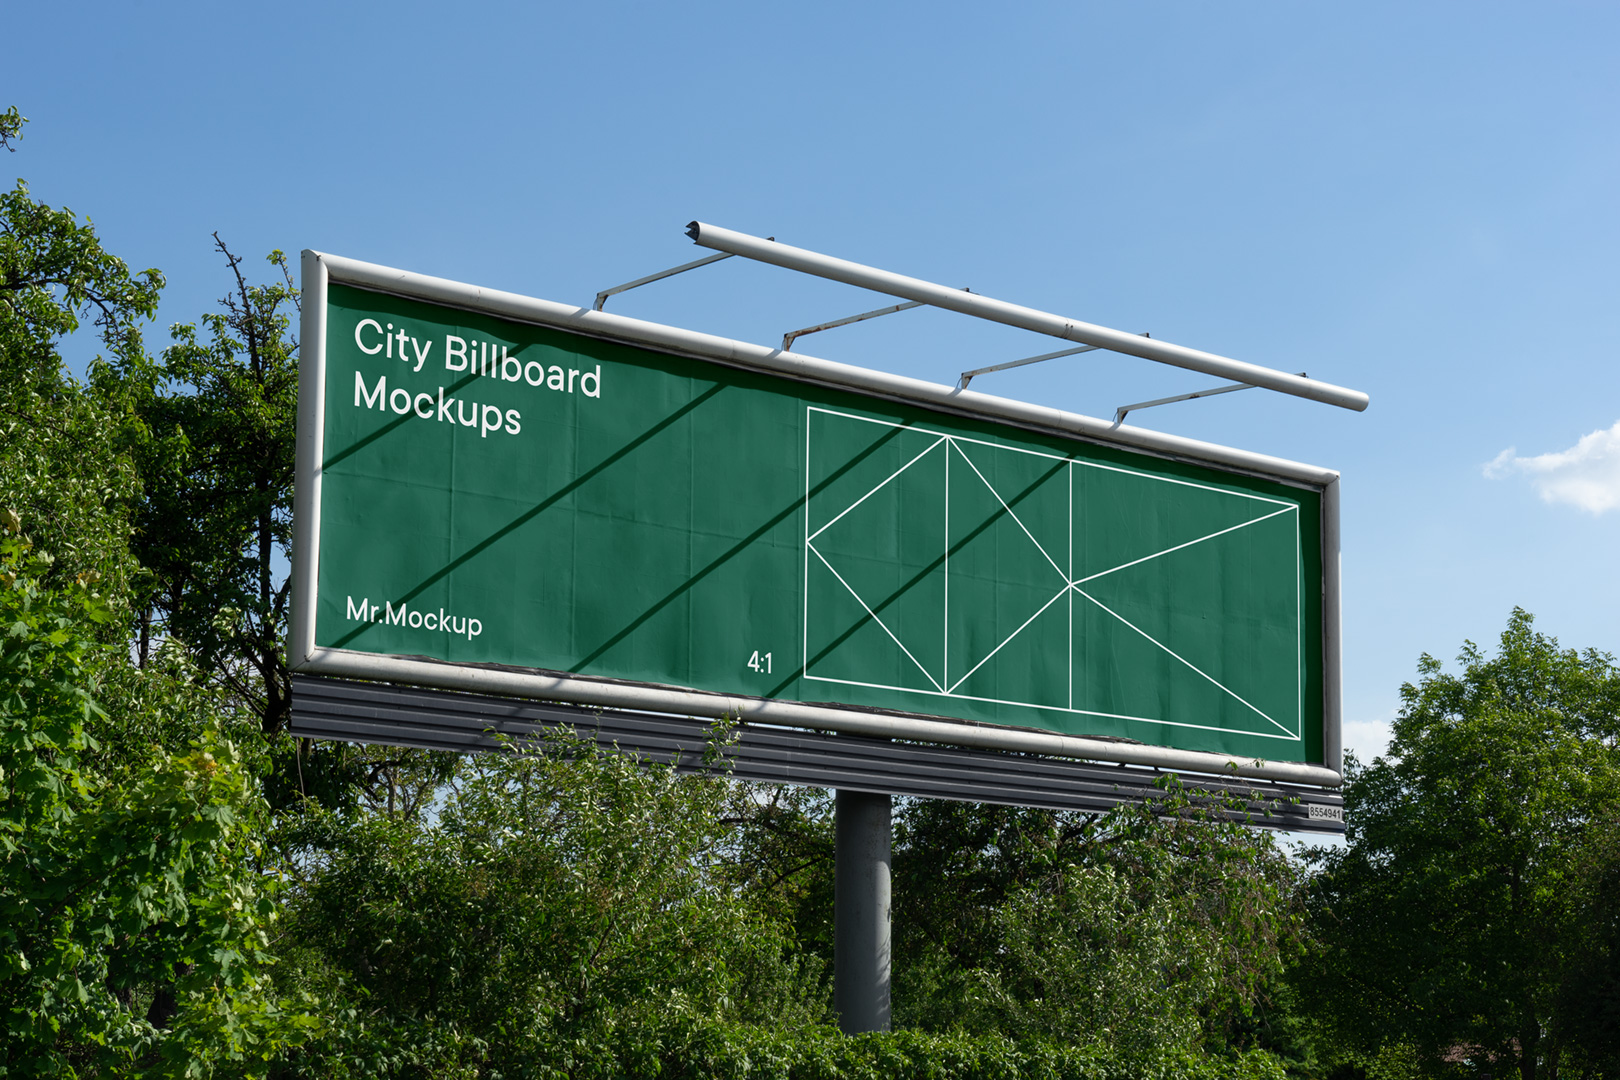 30 City Billboard Mockups a